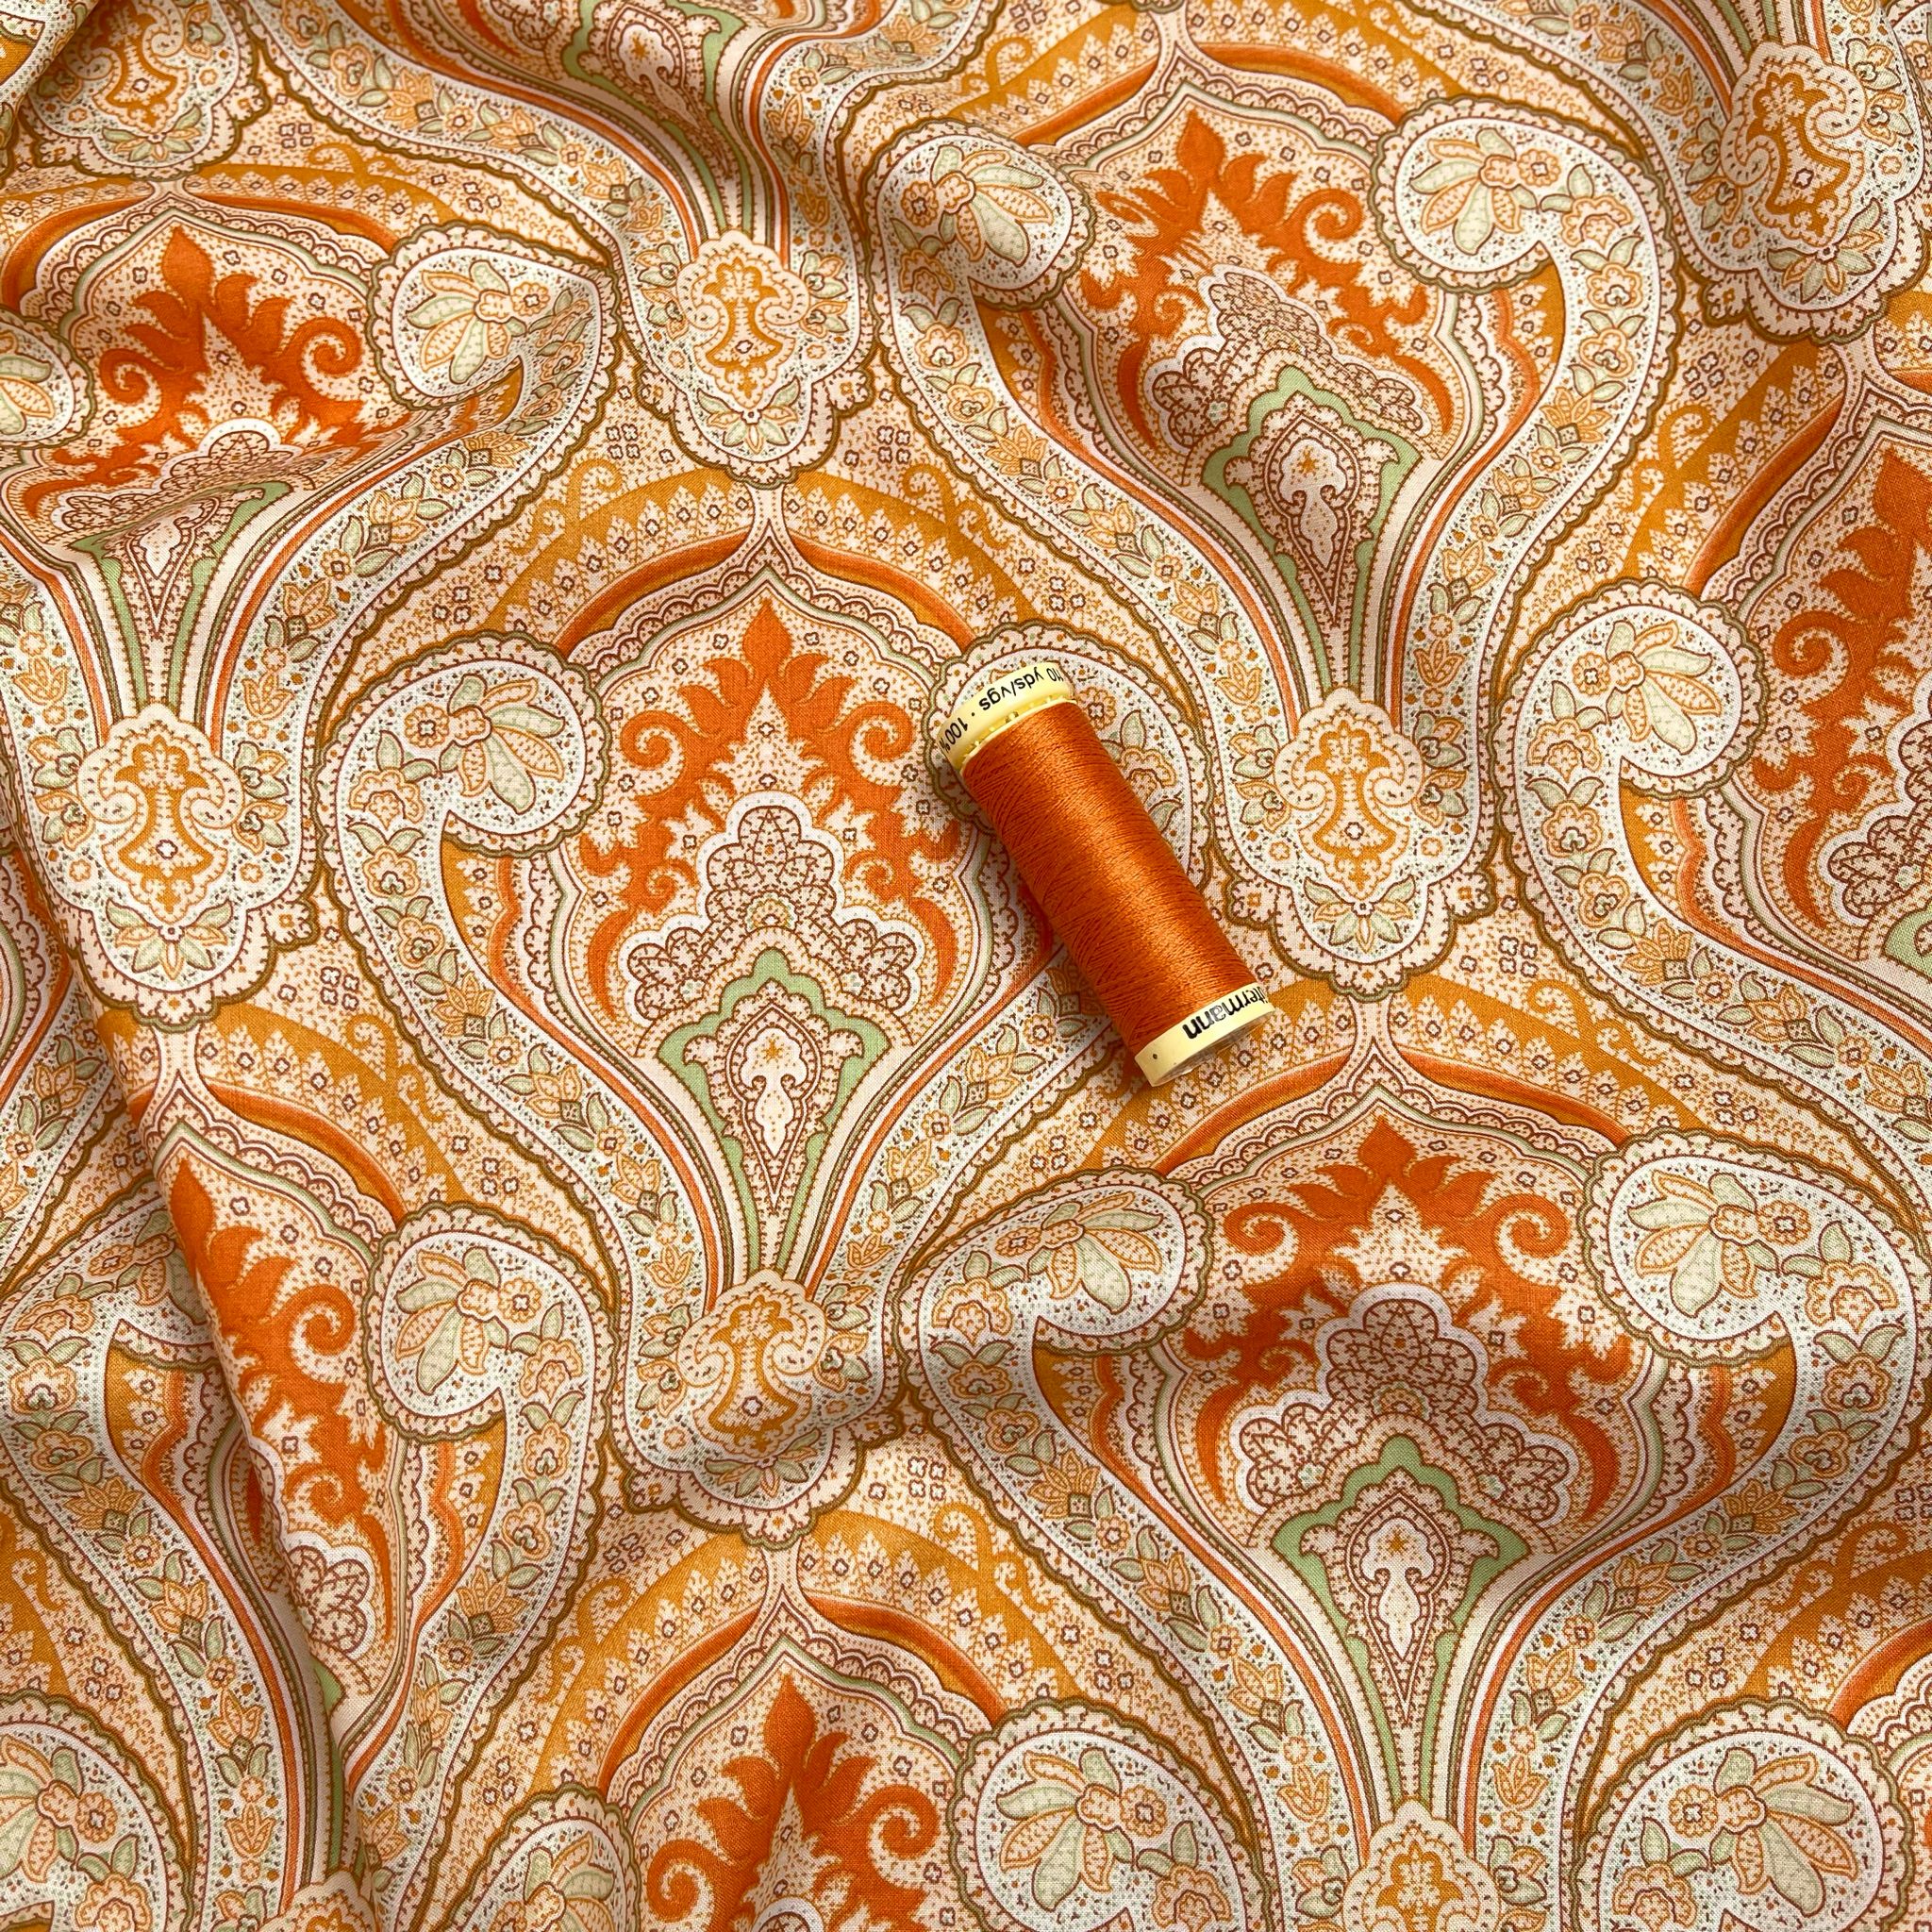 REMNANT 1.38 Metres - Orange Paisley Cotton Lawn Fabric